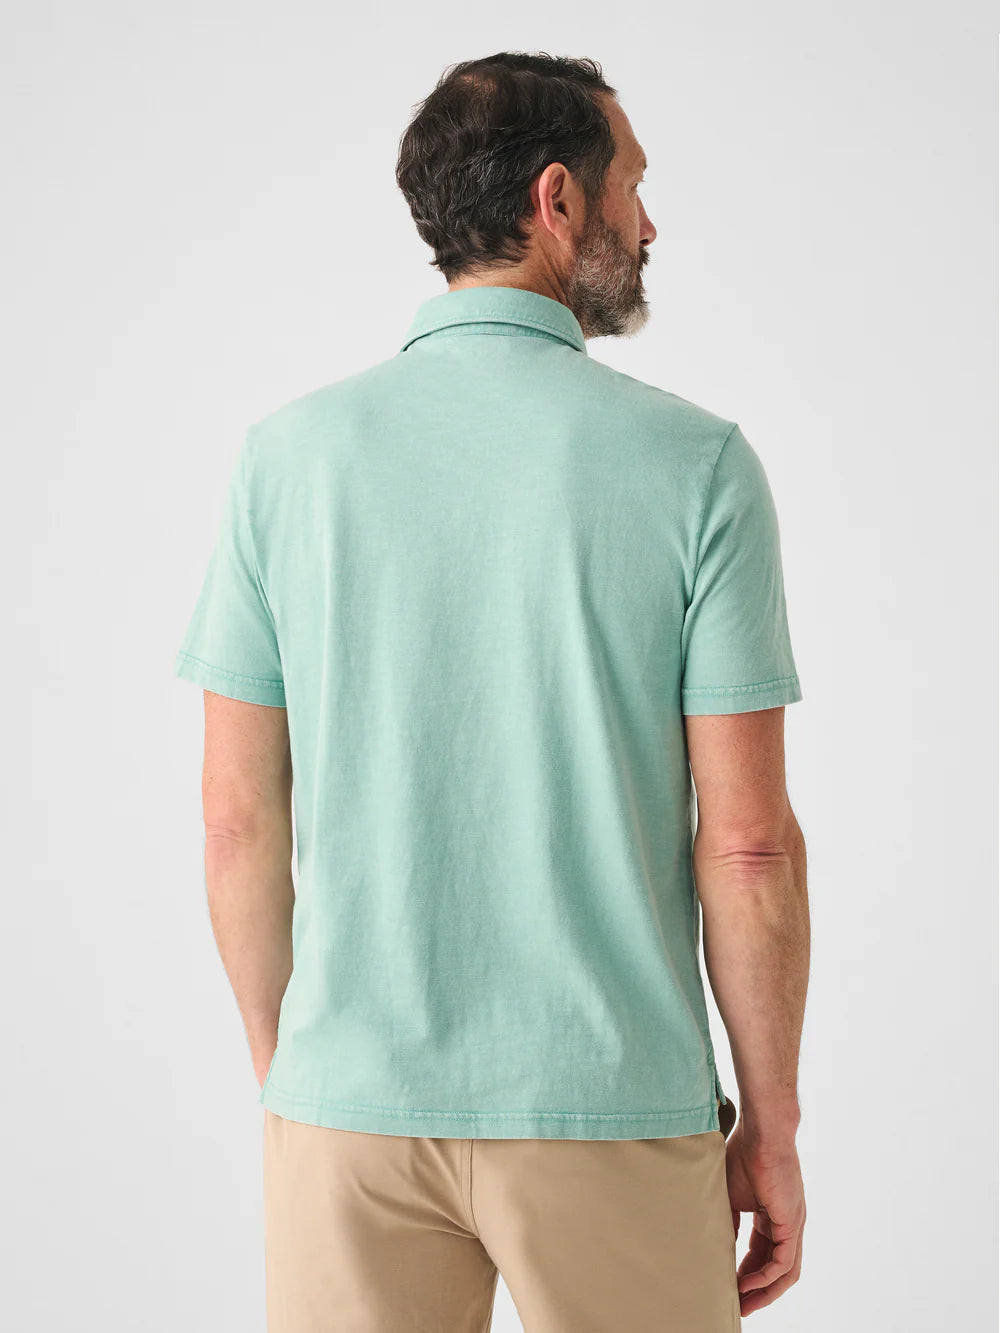 Camiseta Polo Sunwashed - Lagoon Teal